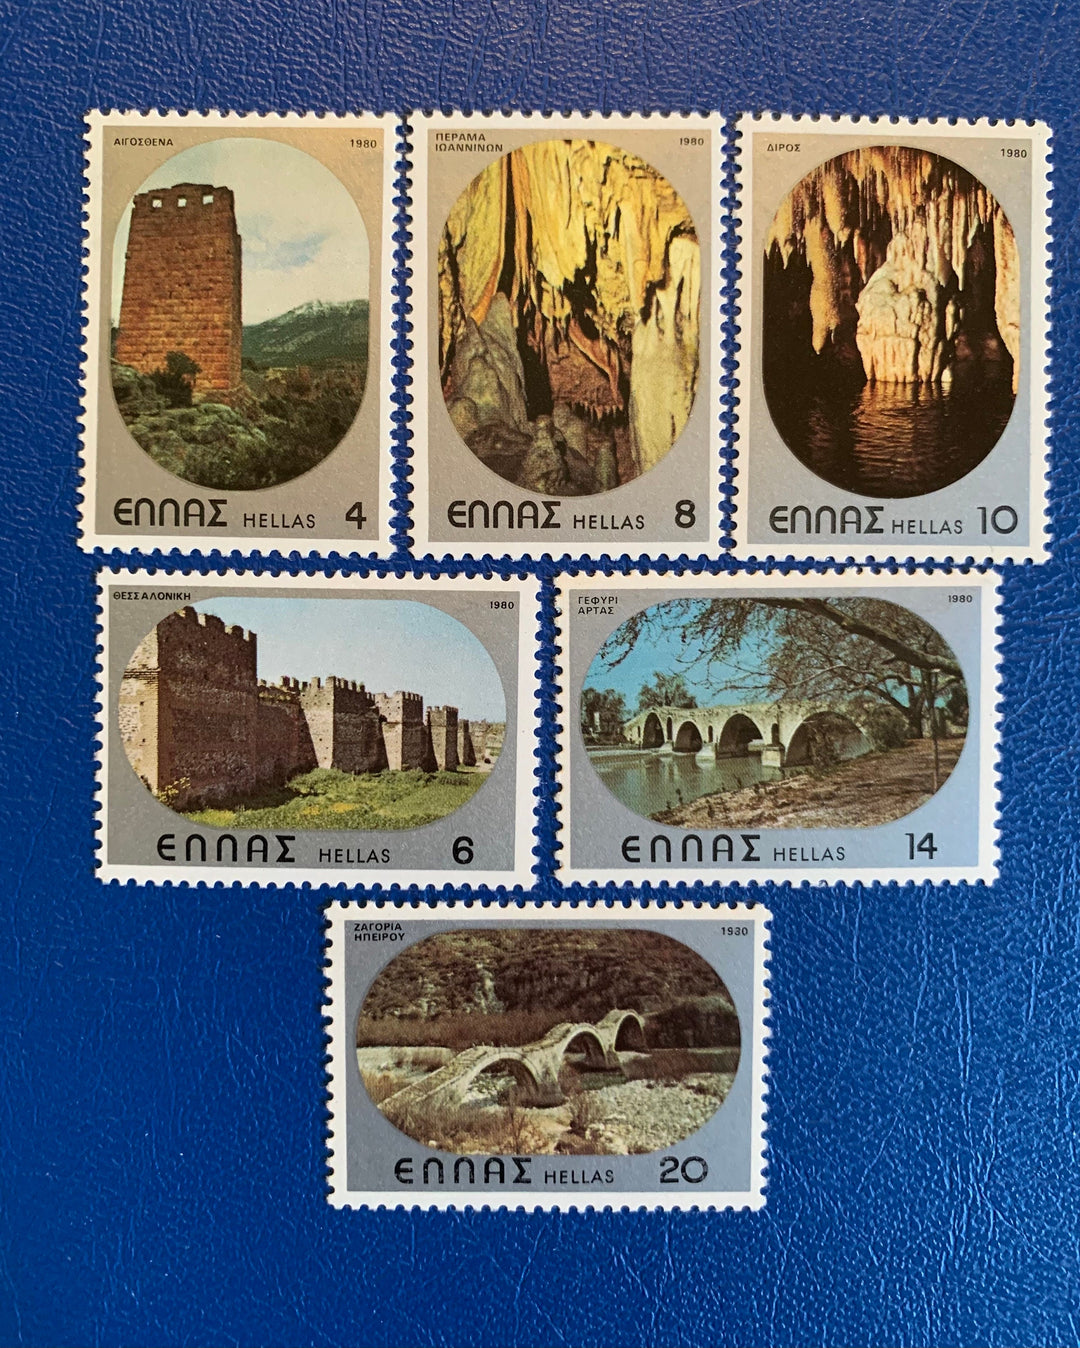 Greece - Original Vintage Postage Stamps- 1980 Castles, Bridges & Caves - for the collector, artist or crafter